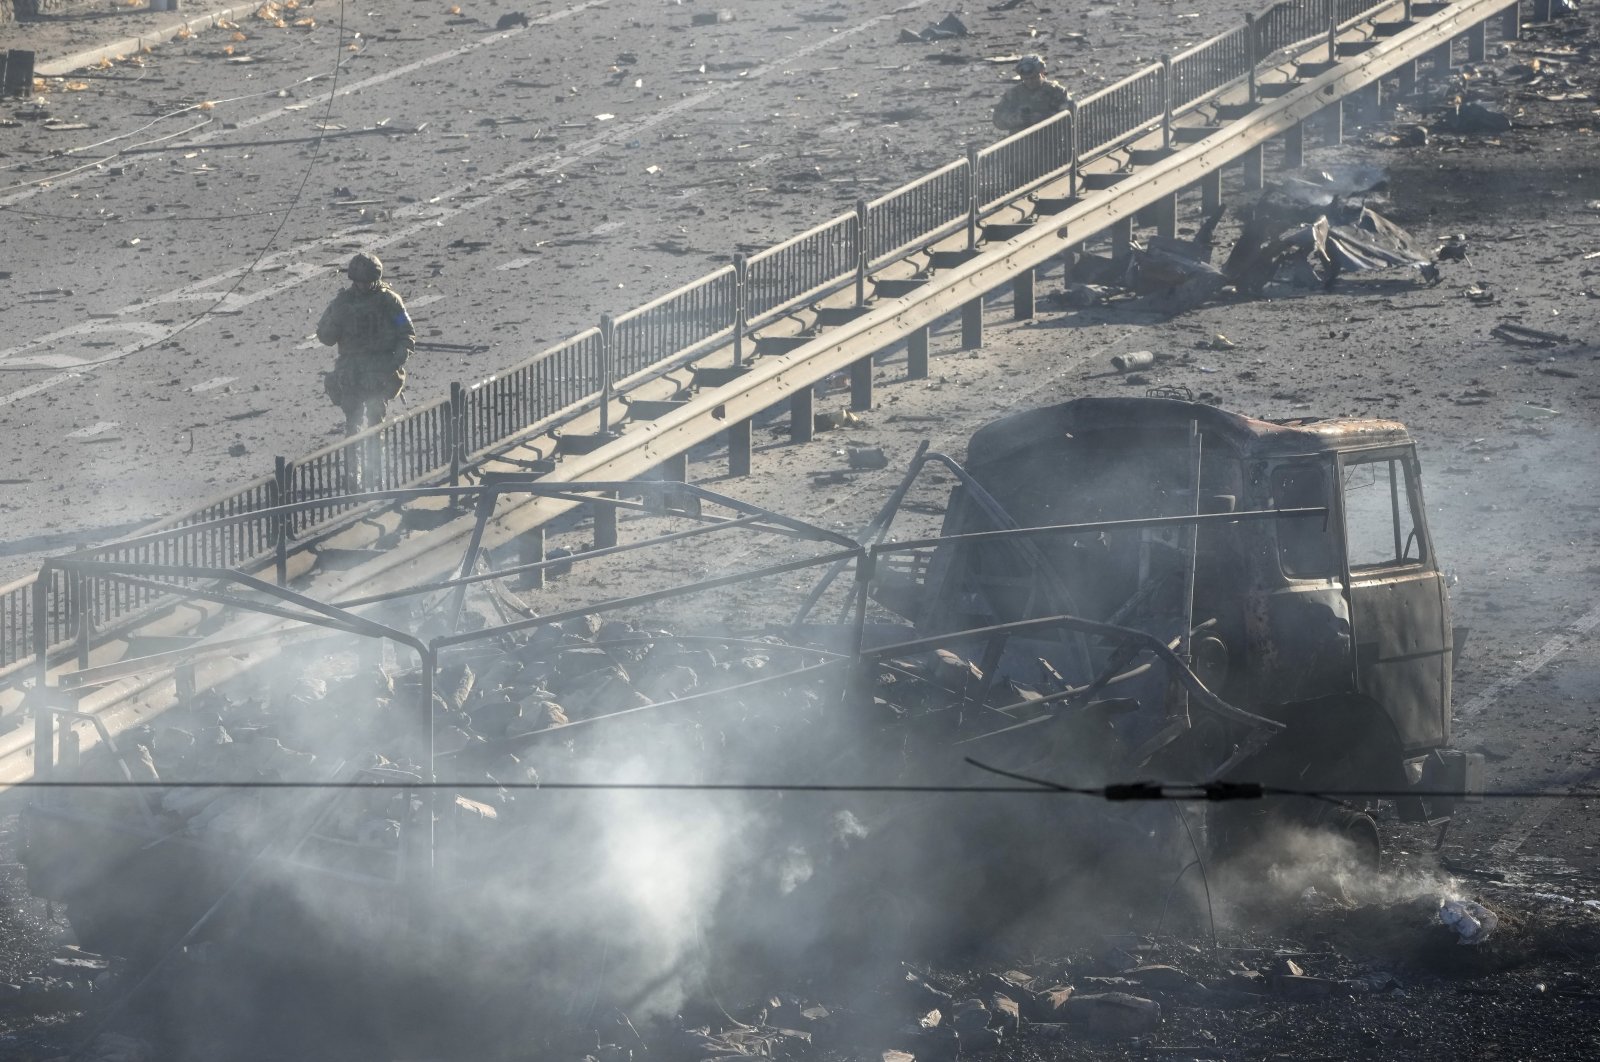 Ukrainian soldiers walk past the debris of a burning military truck, on a street in Kyiv, Ukraine, Feb. 26, 2022. (AP Photo)